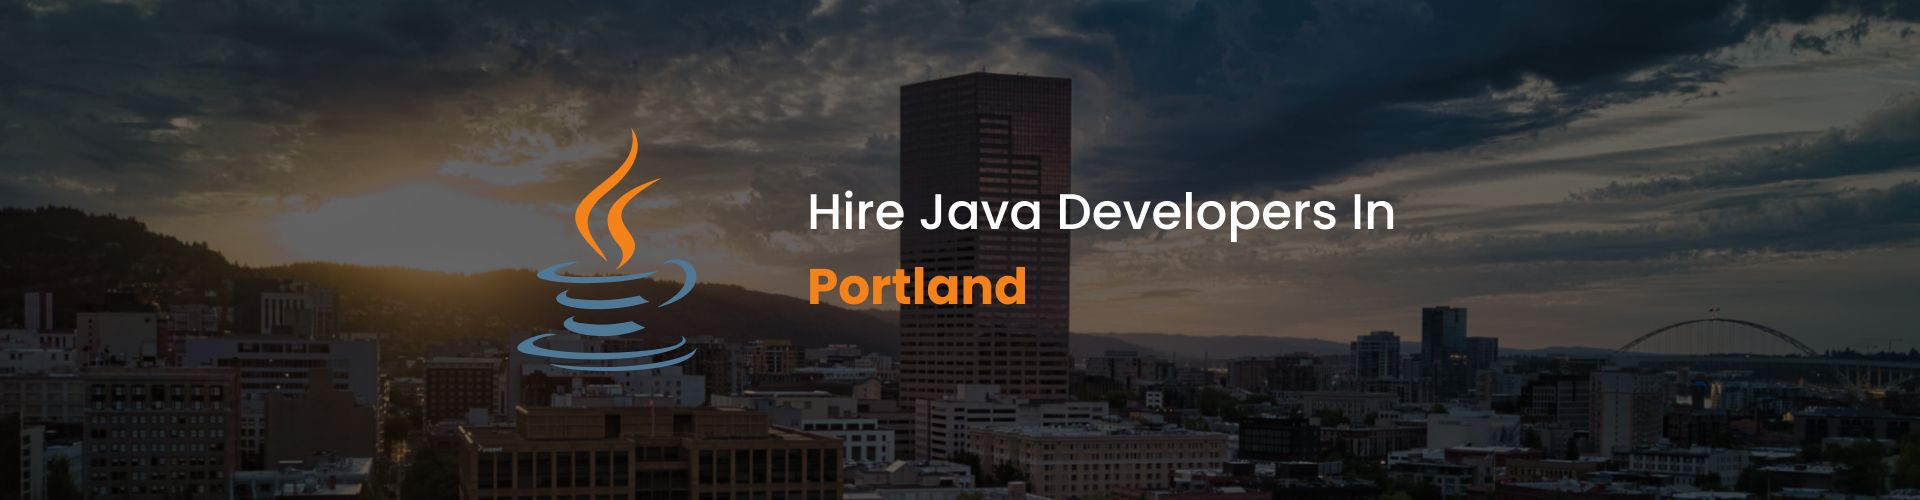 hire java developers in portland